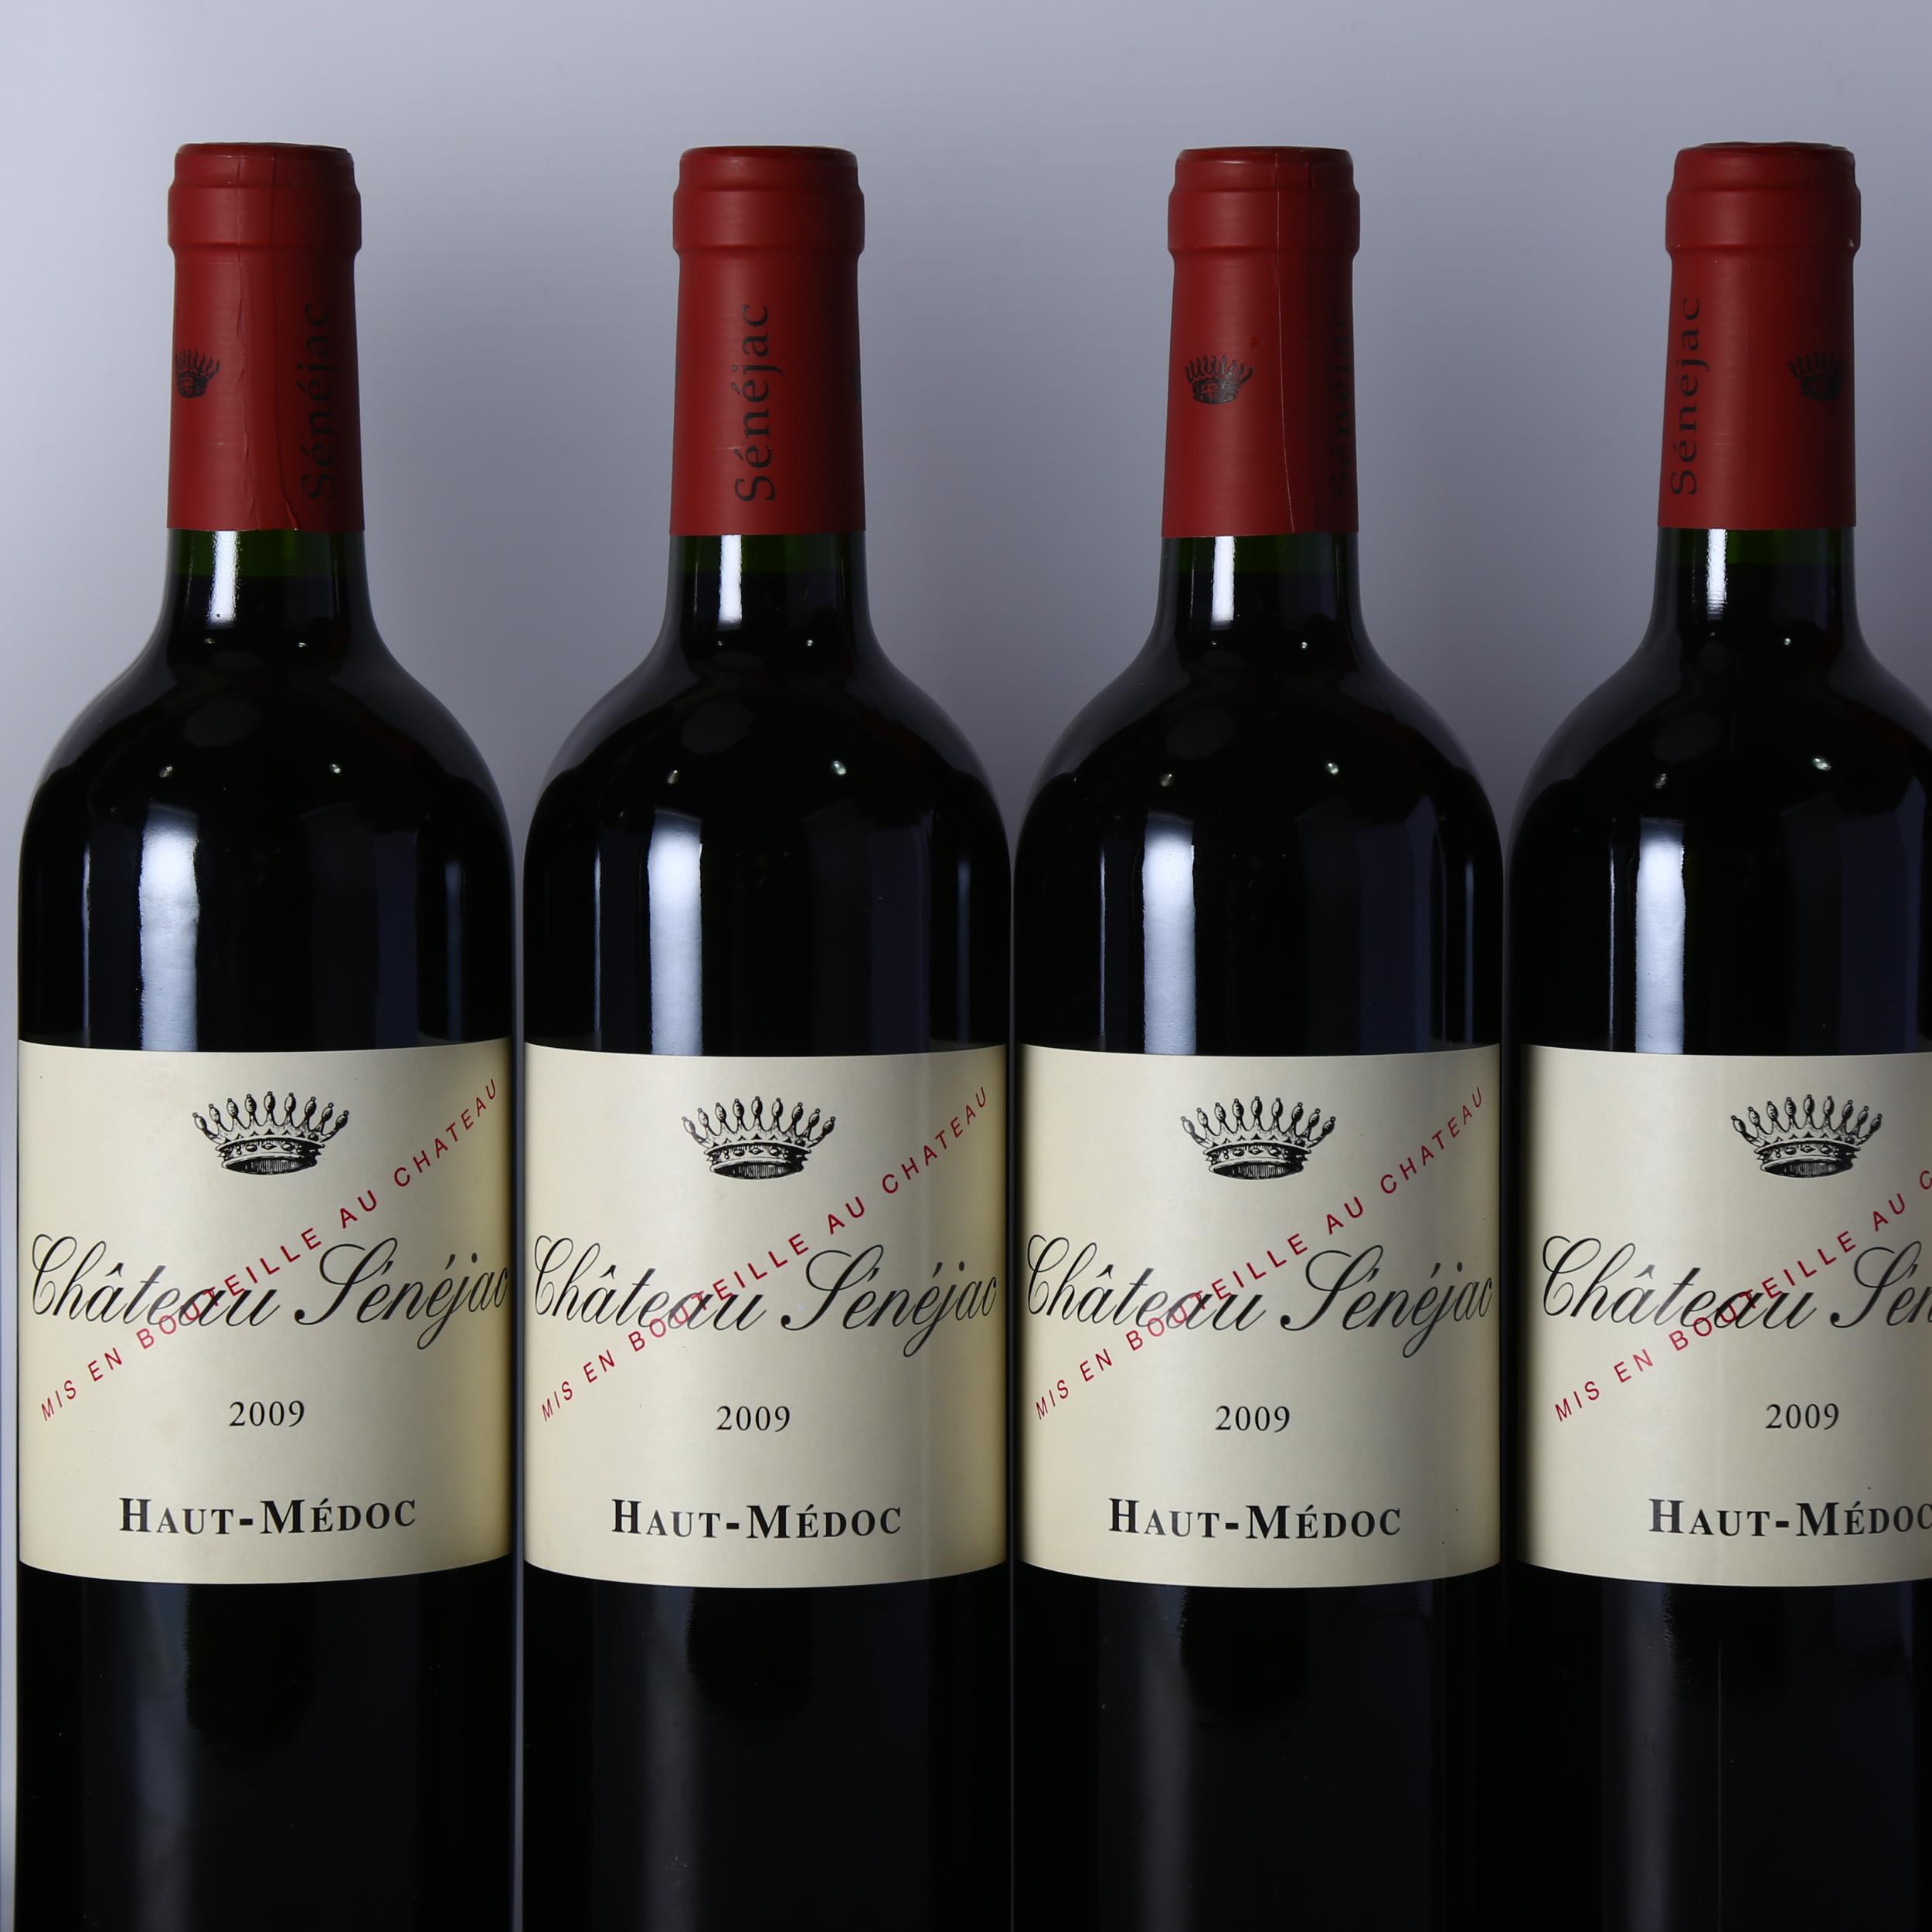 Chateau Senejac 2009, Haut-Medoc x 6 bottles. 93 points Wine Advocate. Bordeaux red wine. - Image 2 of 3